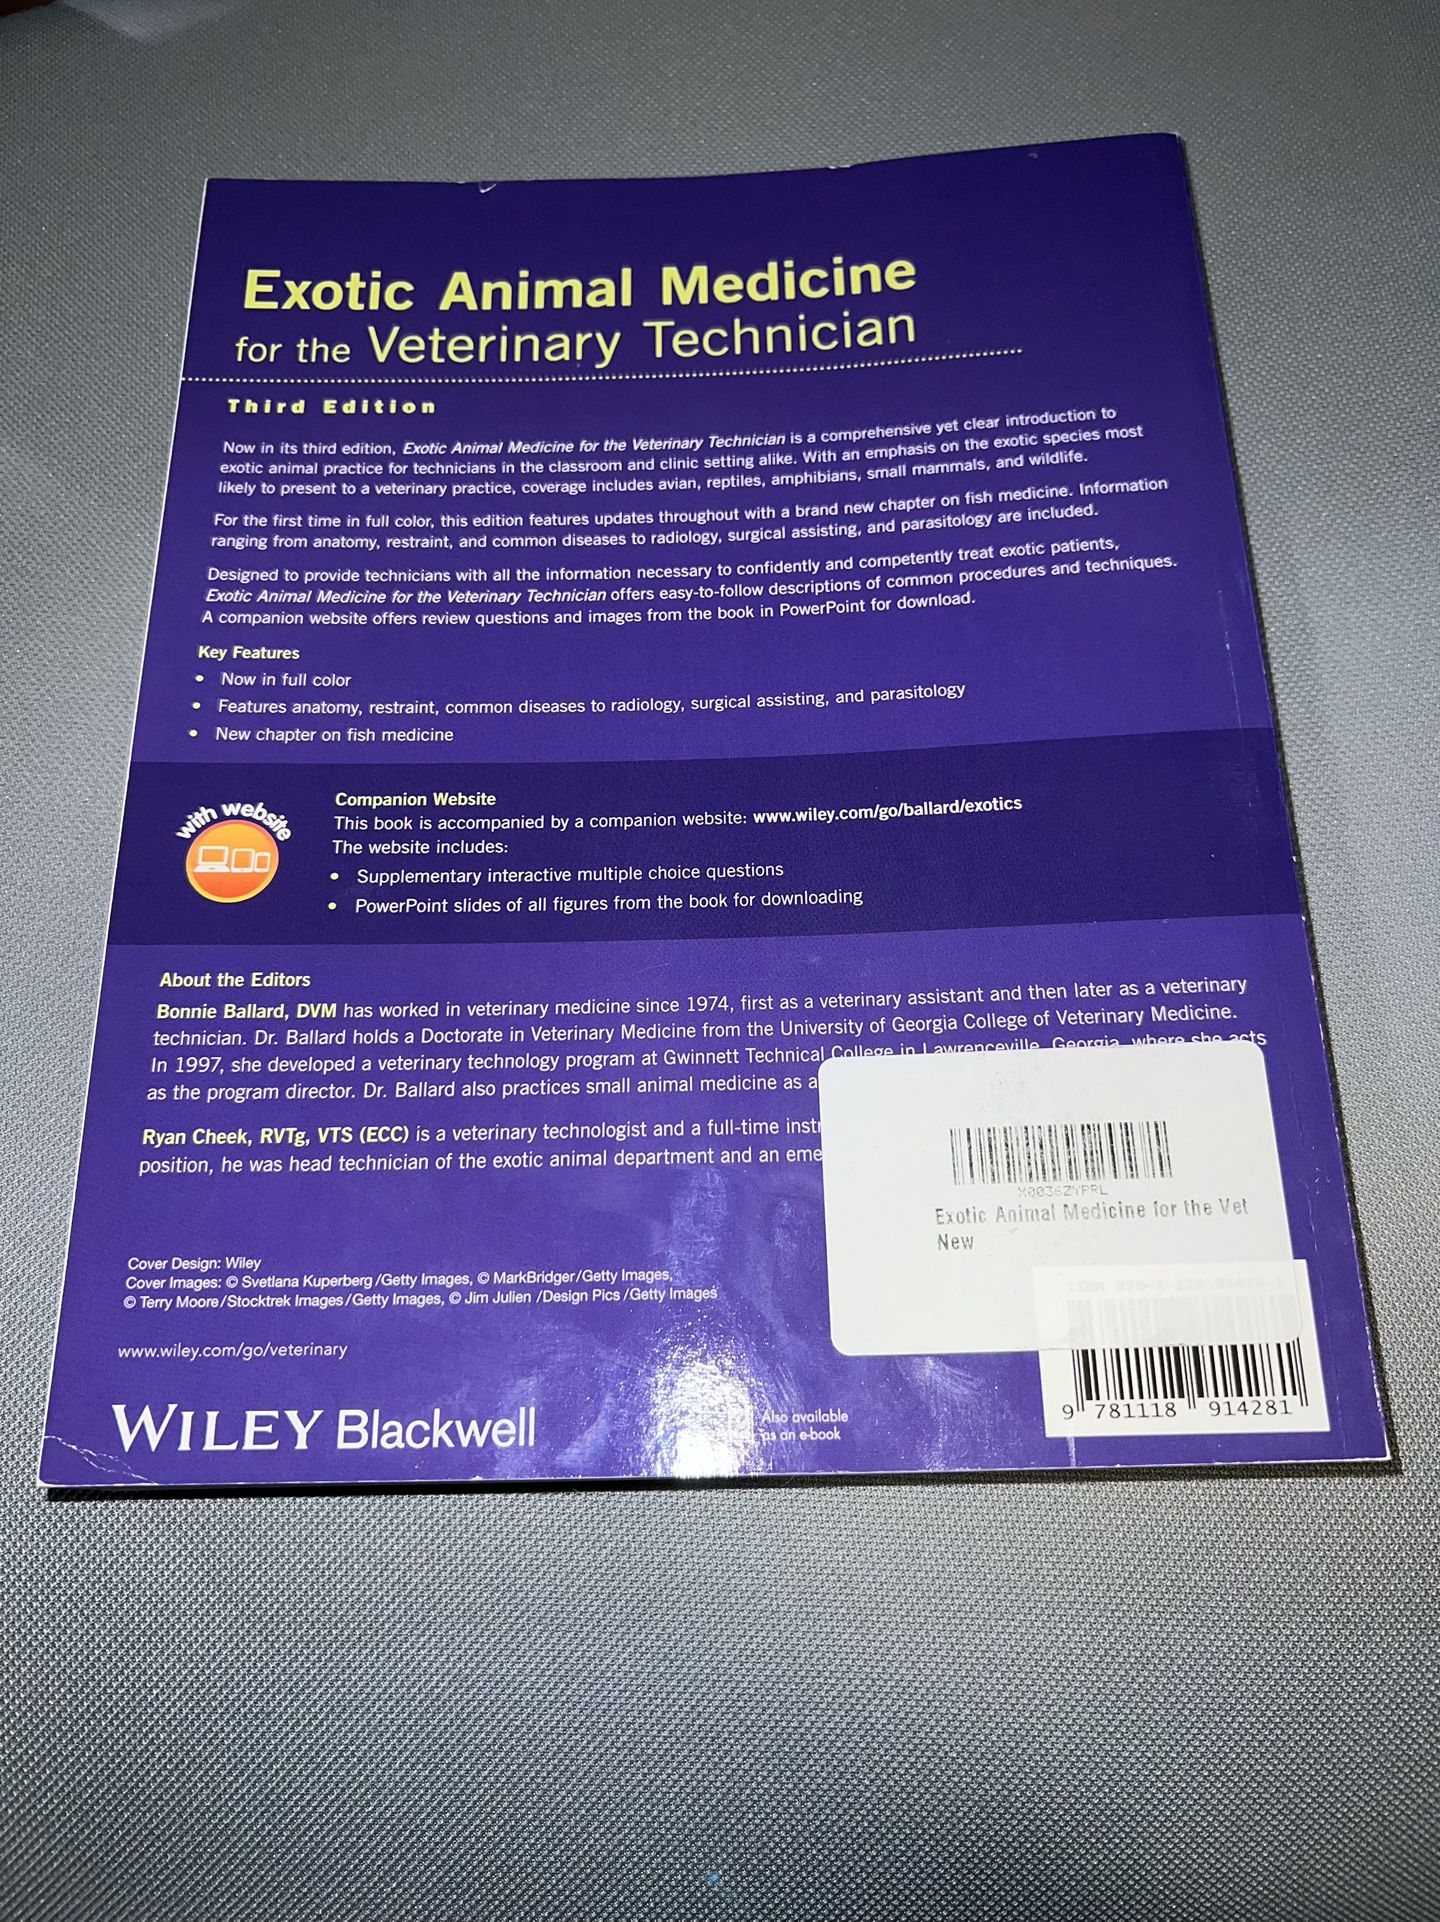 Exotic Animal Medicine for Veterinary Technician 